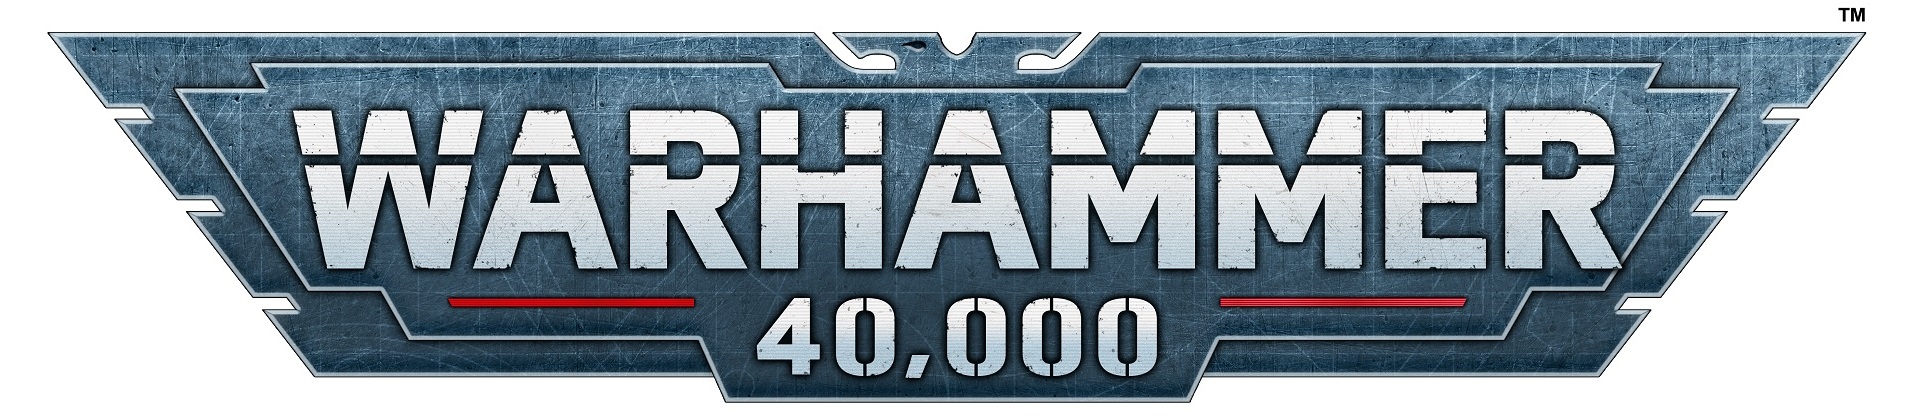 The Warhammer 40,000 Logo.